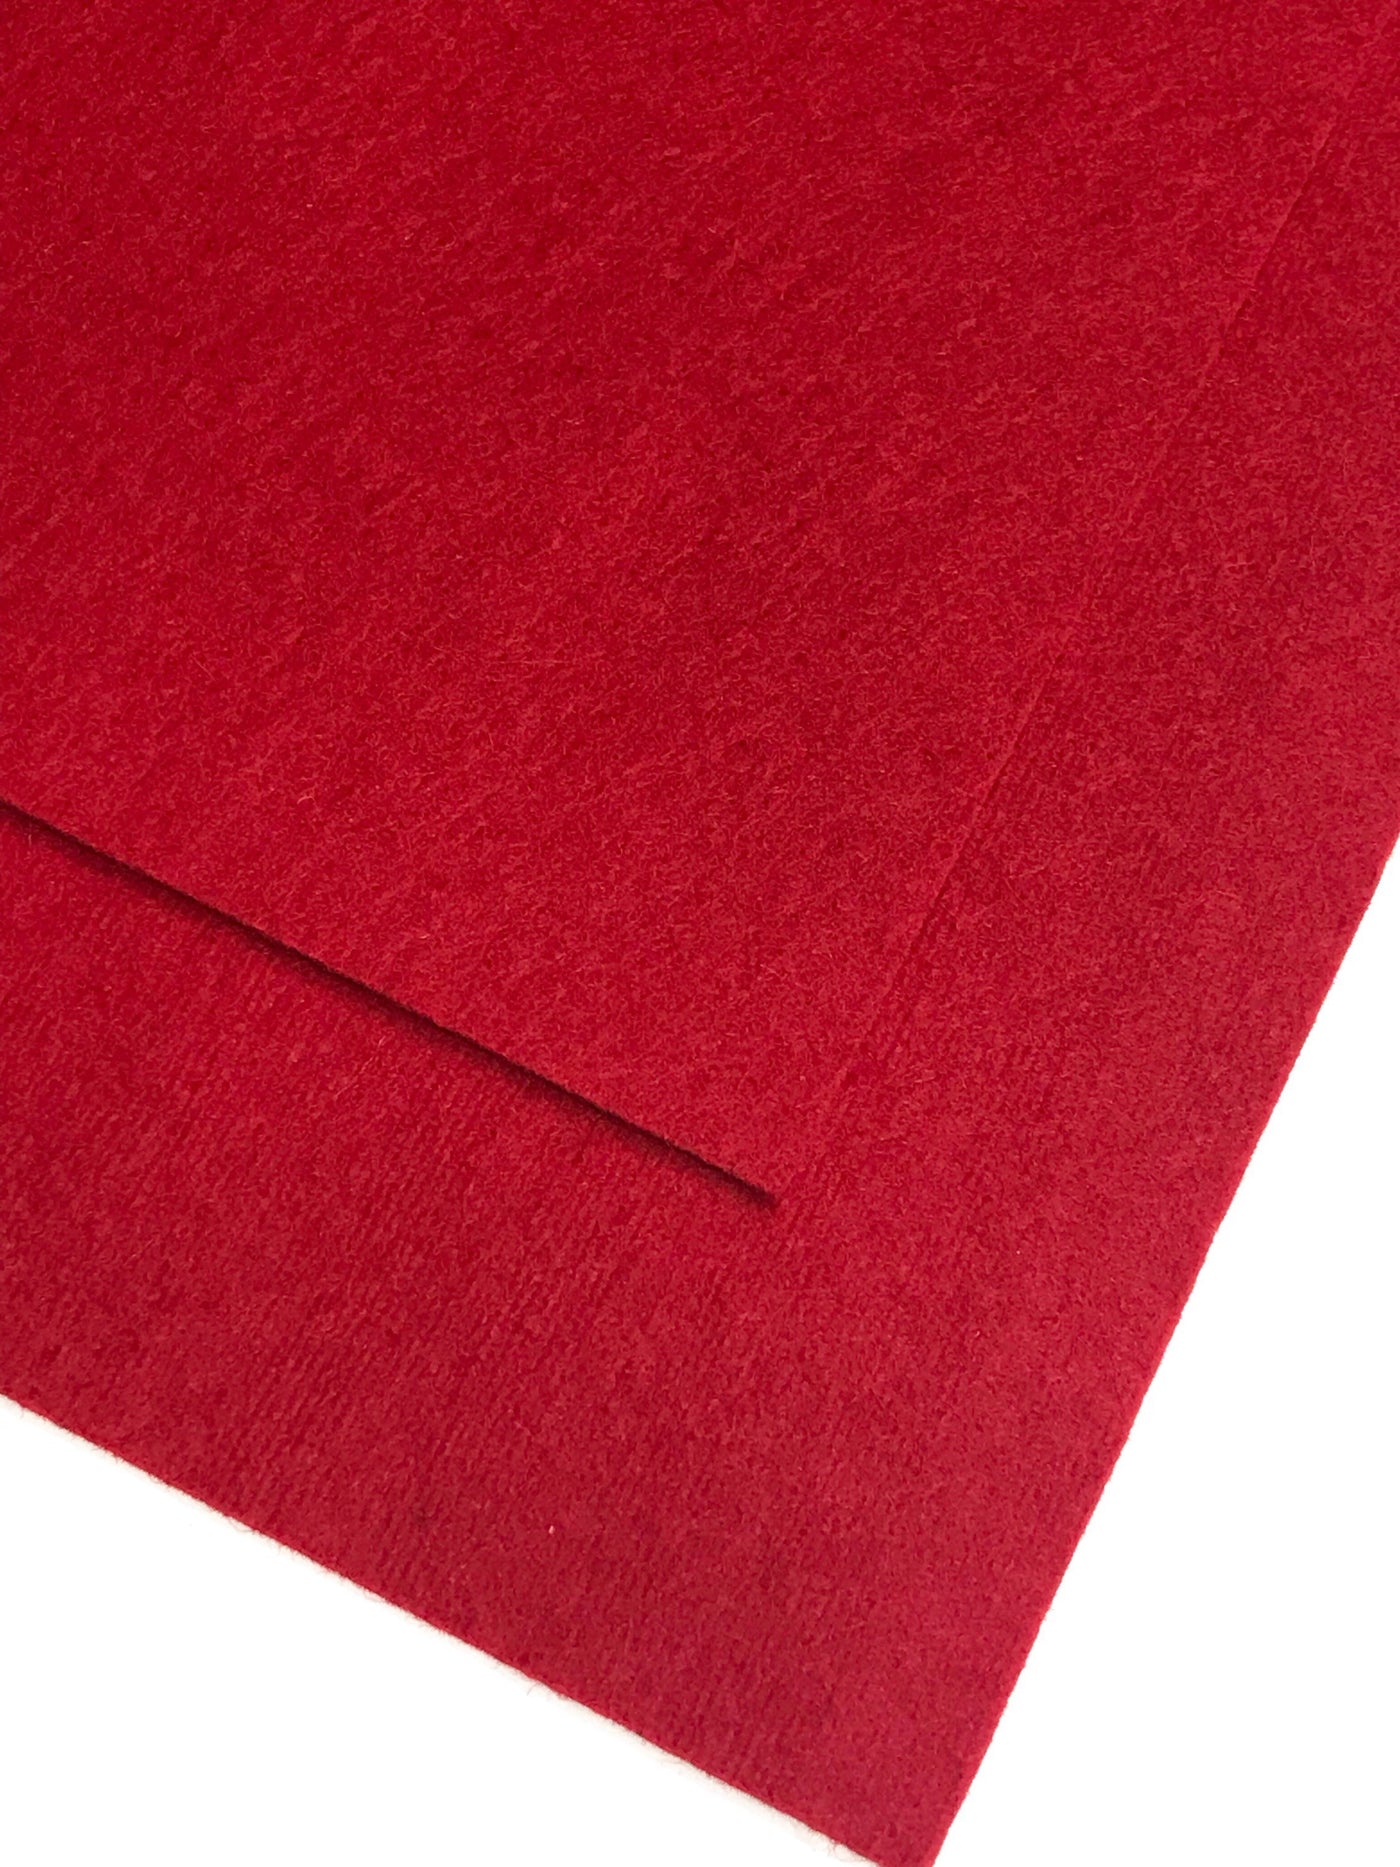 1mm Rich Red Merino Wool Felt 8 x 11"  Sheet - No. 07